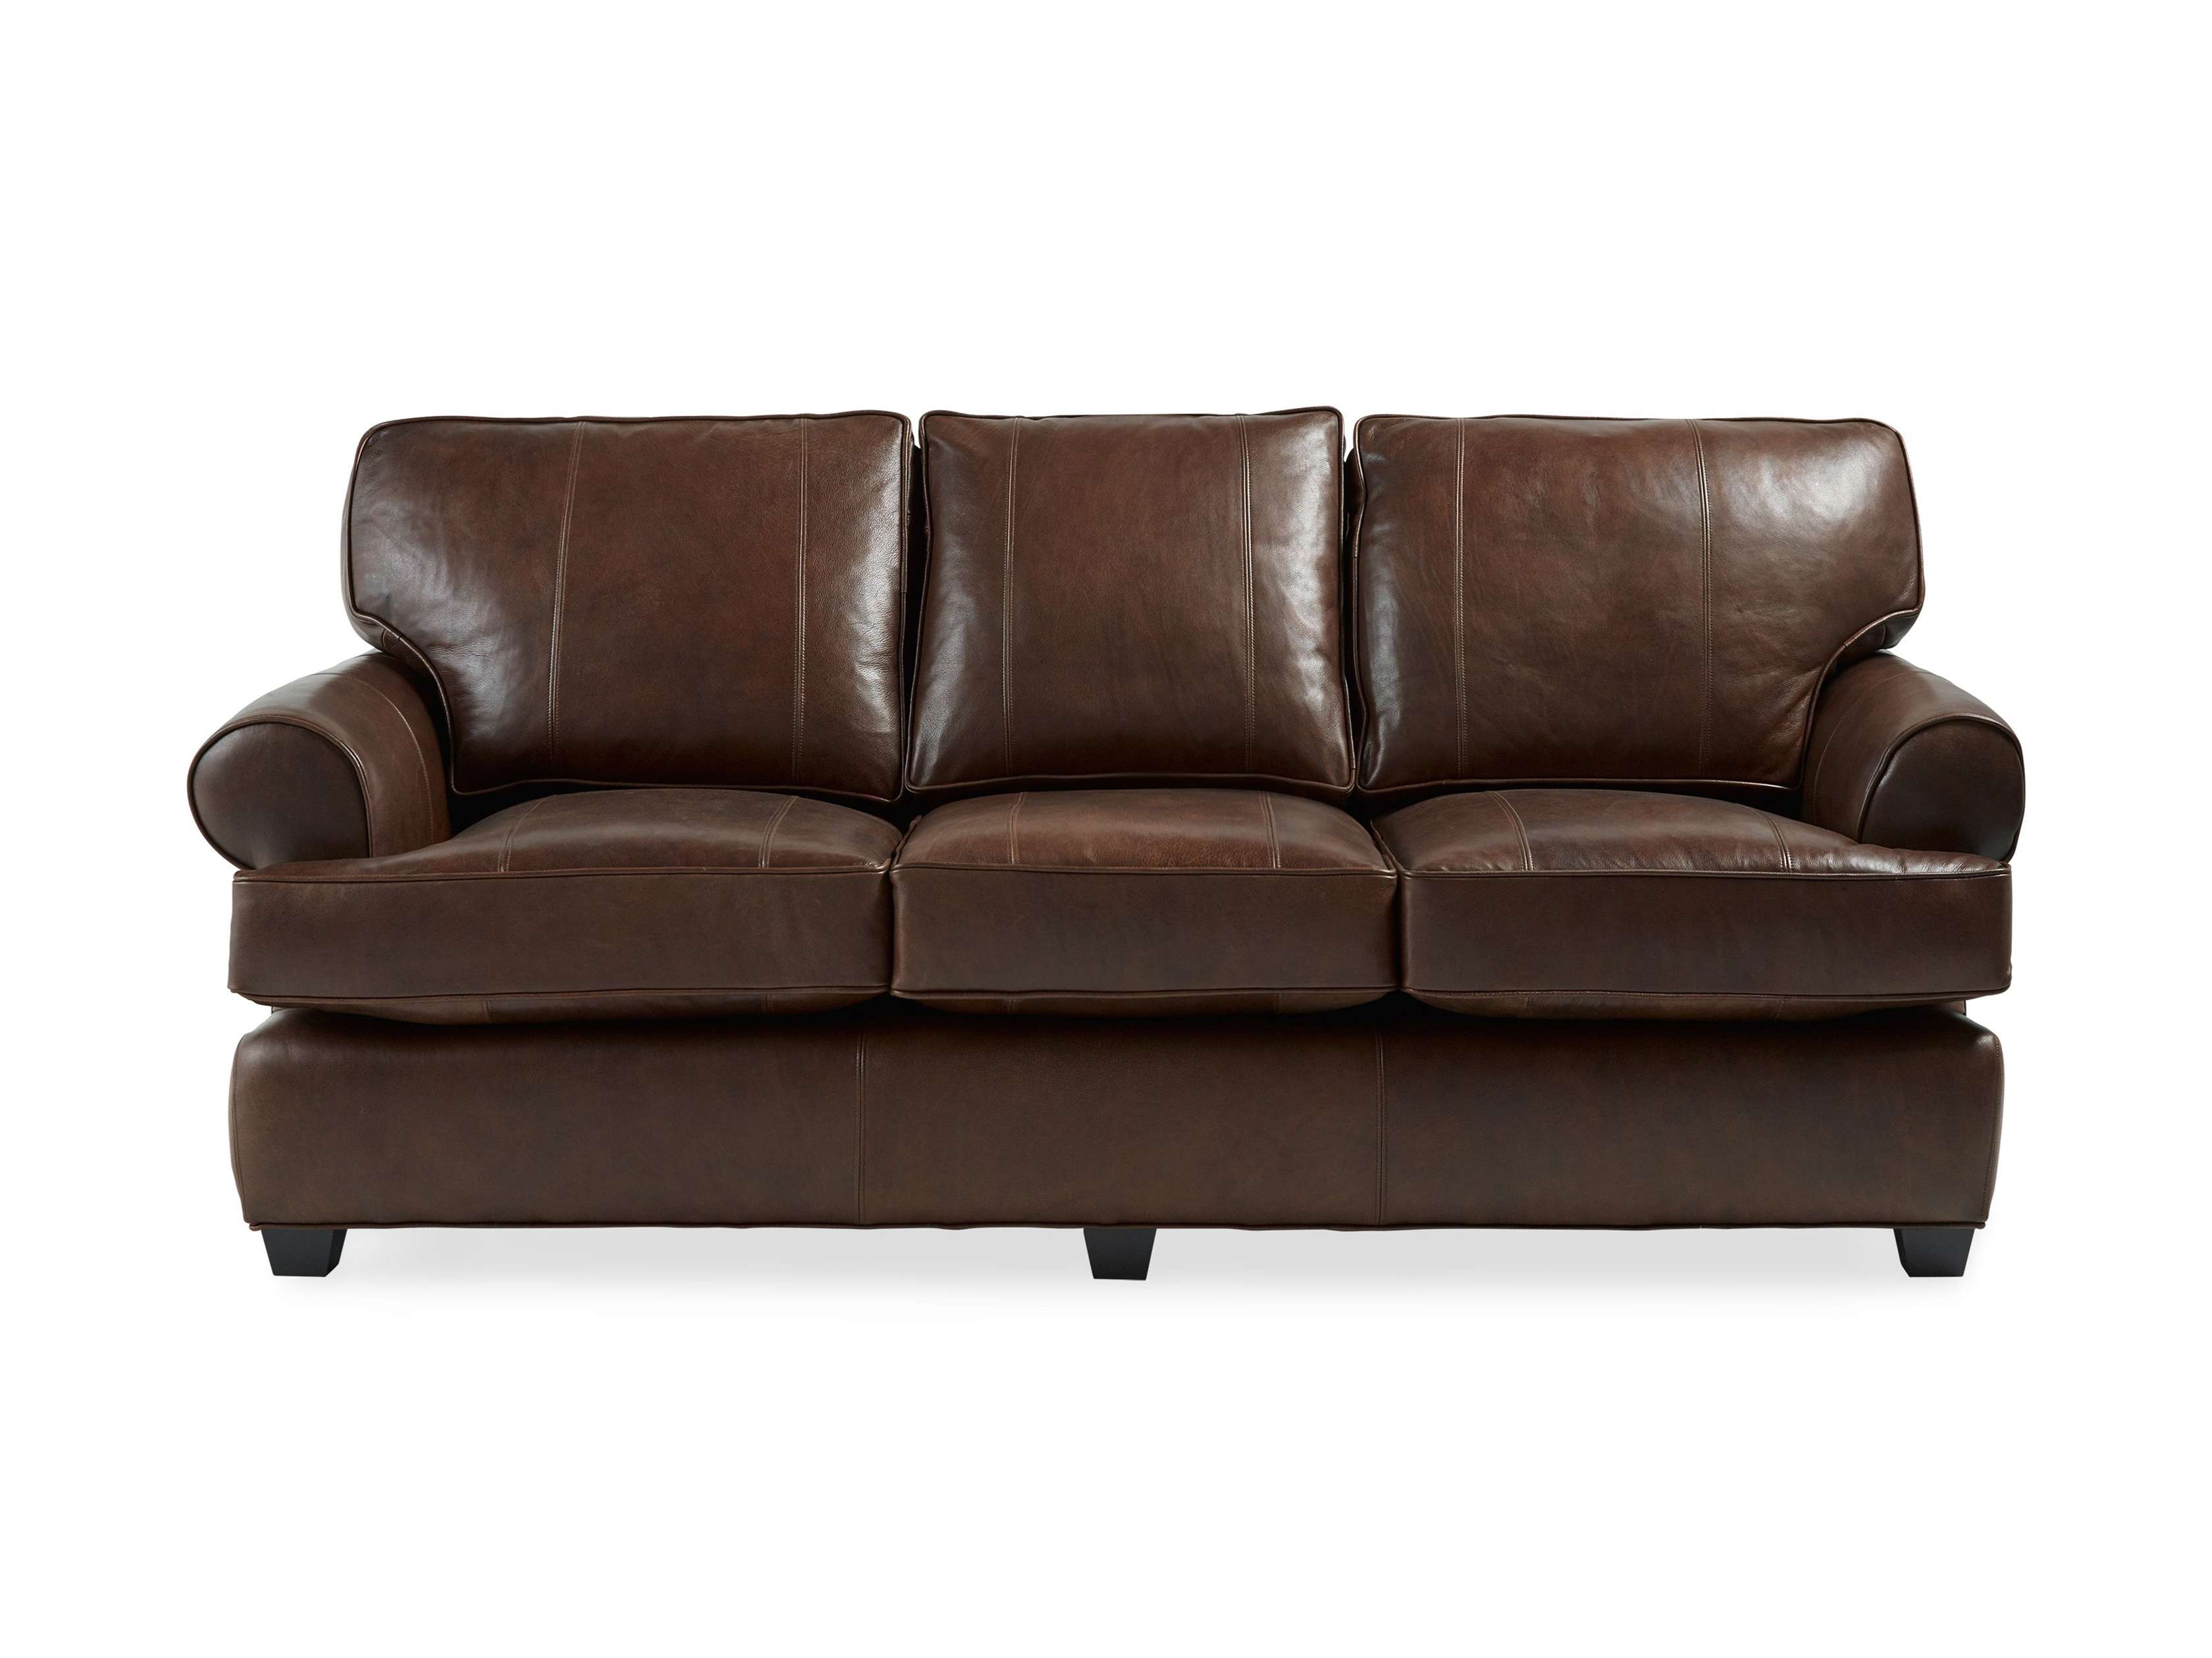 Hadley Leather Sofa Arhaus, Chocolate Brown Leather Sofa Dye